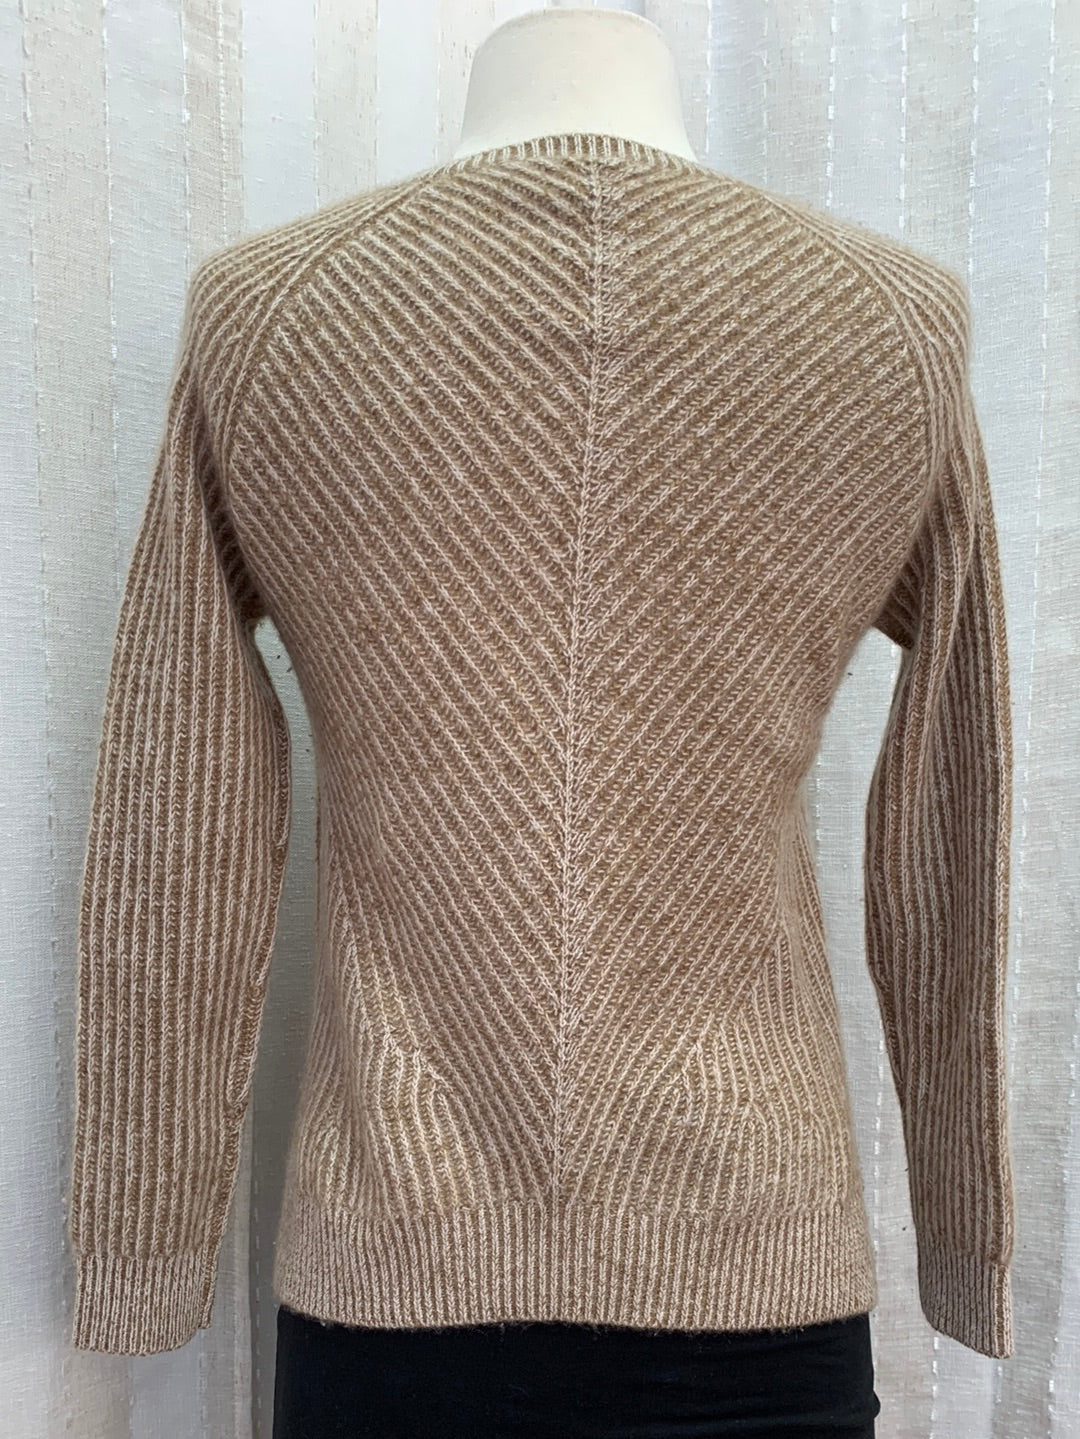 MOTH ANTHROPOLOGIE marled tan Cashmere Sweater - XXS